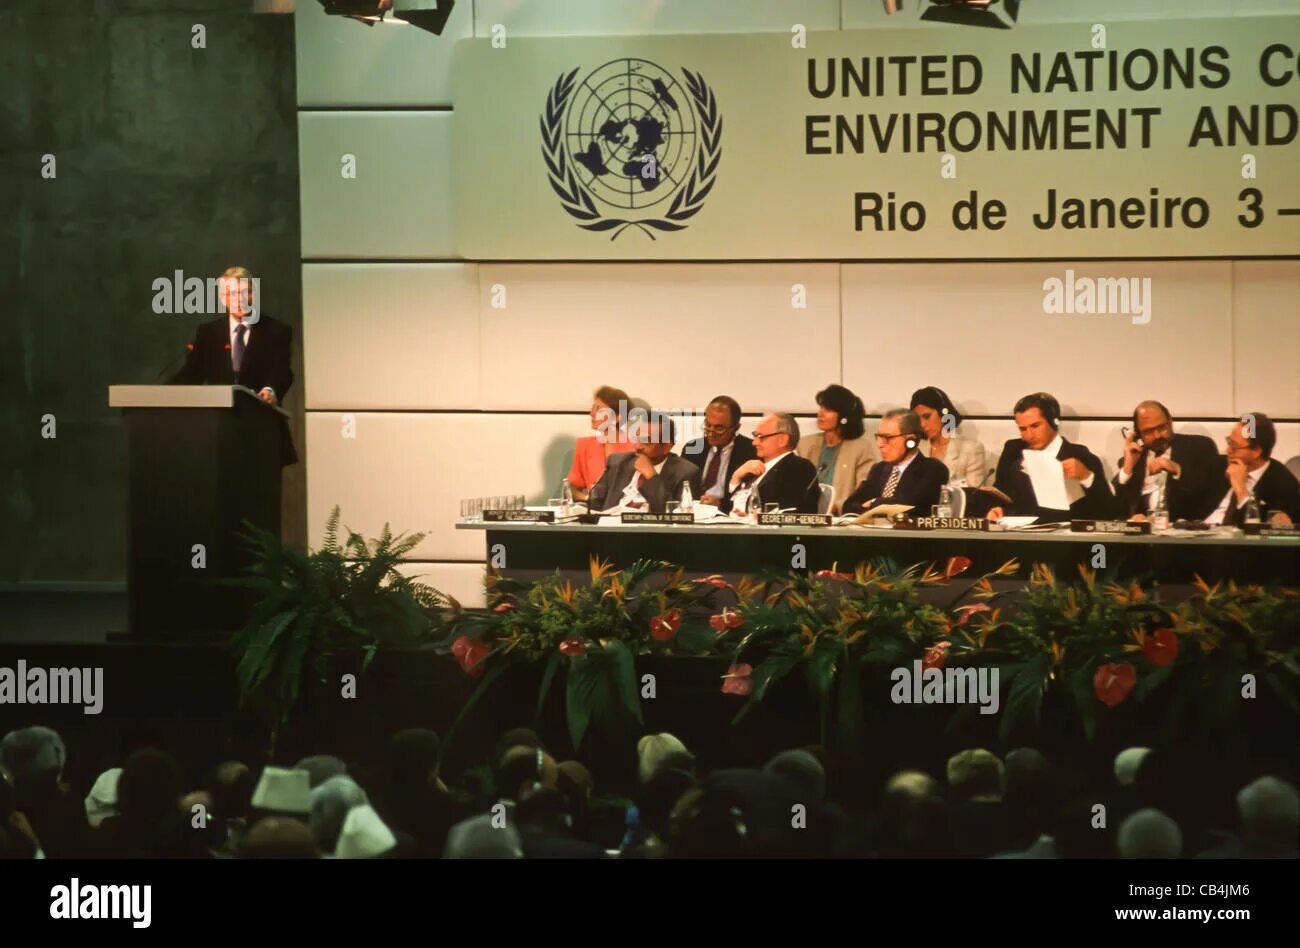 Оон повестка дня. Конференция ООН В Рио де Жанейро 1992. Саммит в Рио де Жанейро 1992. Конференция ООН по окружающей среде и развитию в Рио-де-Жанейро. Конференции ООН по окружающей среде в Рио-де-Жанейро (1992 г.)».